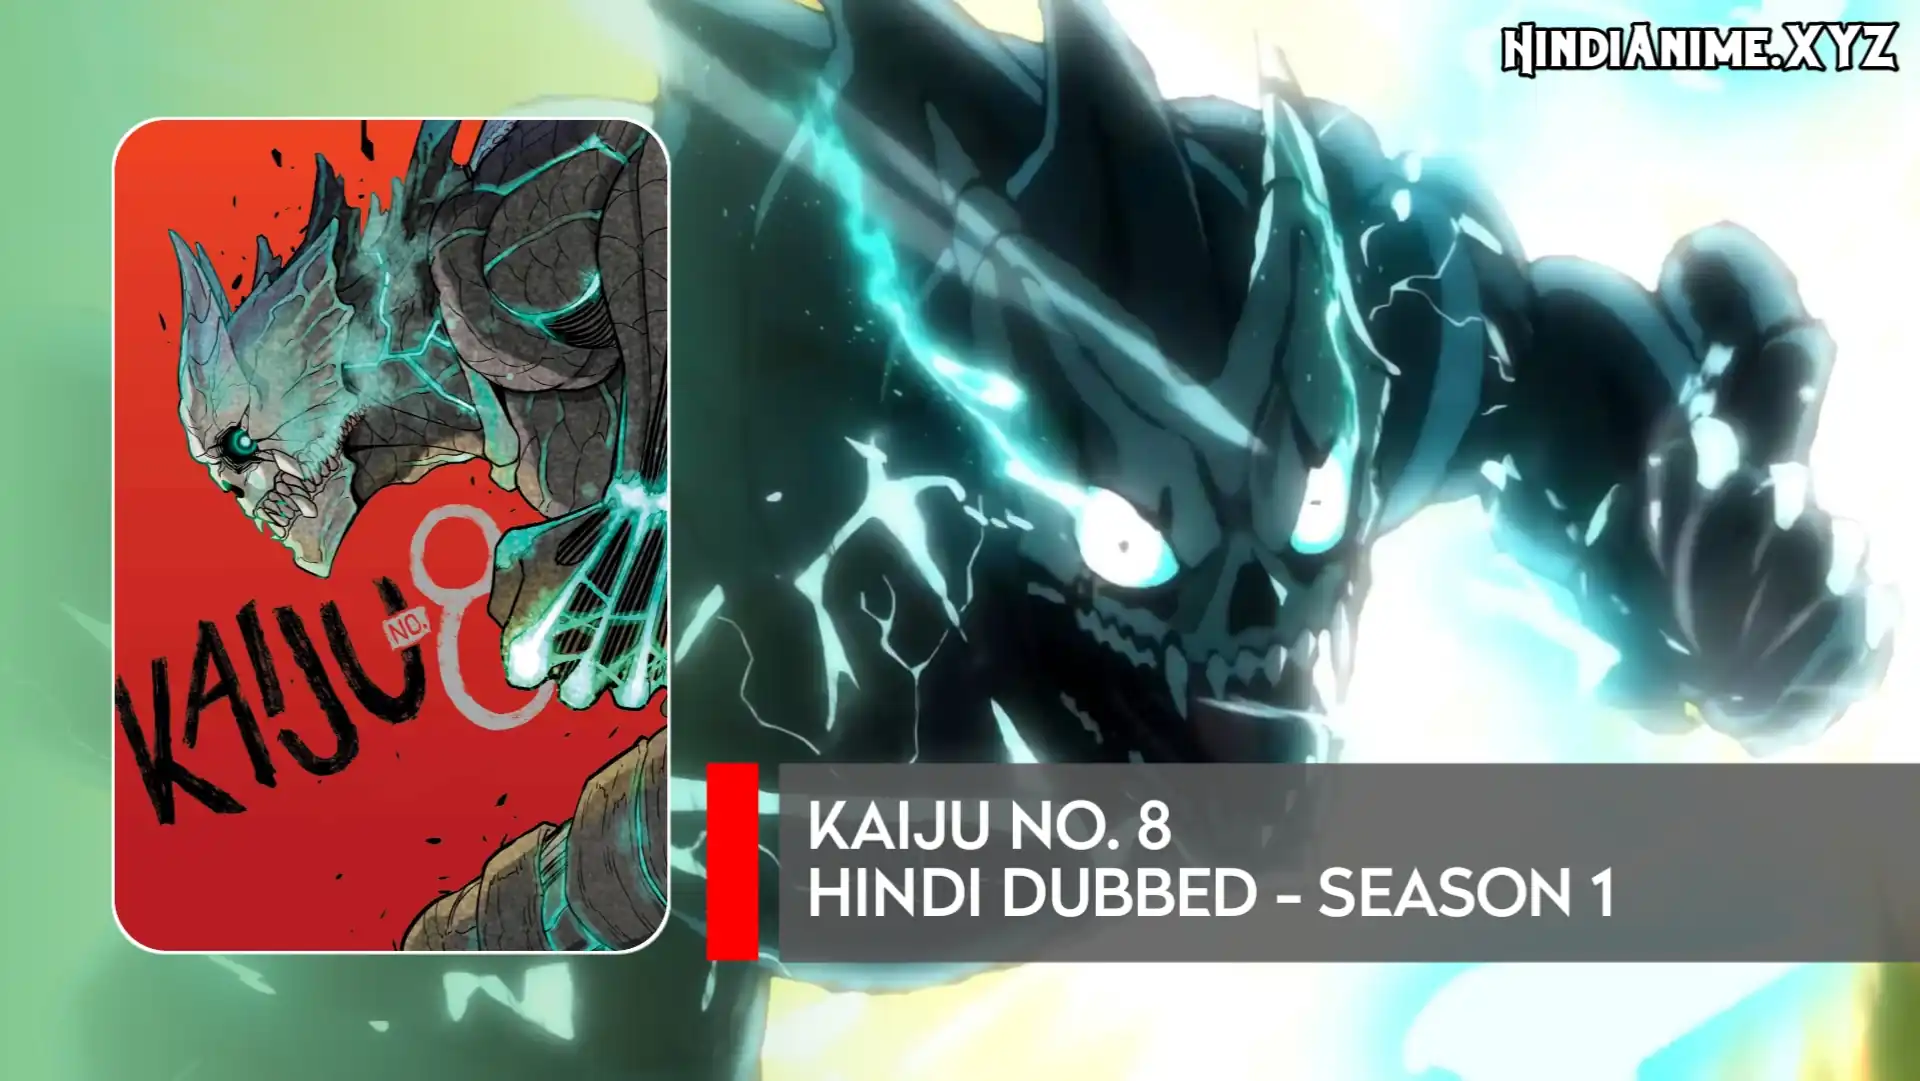 Kaiju No 8 Season 1 in Hindi Dubbed Download HD - HindiAnime.XYZ, Kaijuu 8-gou All Episode in Hindi